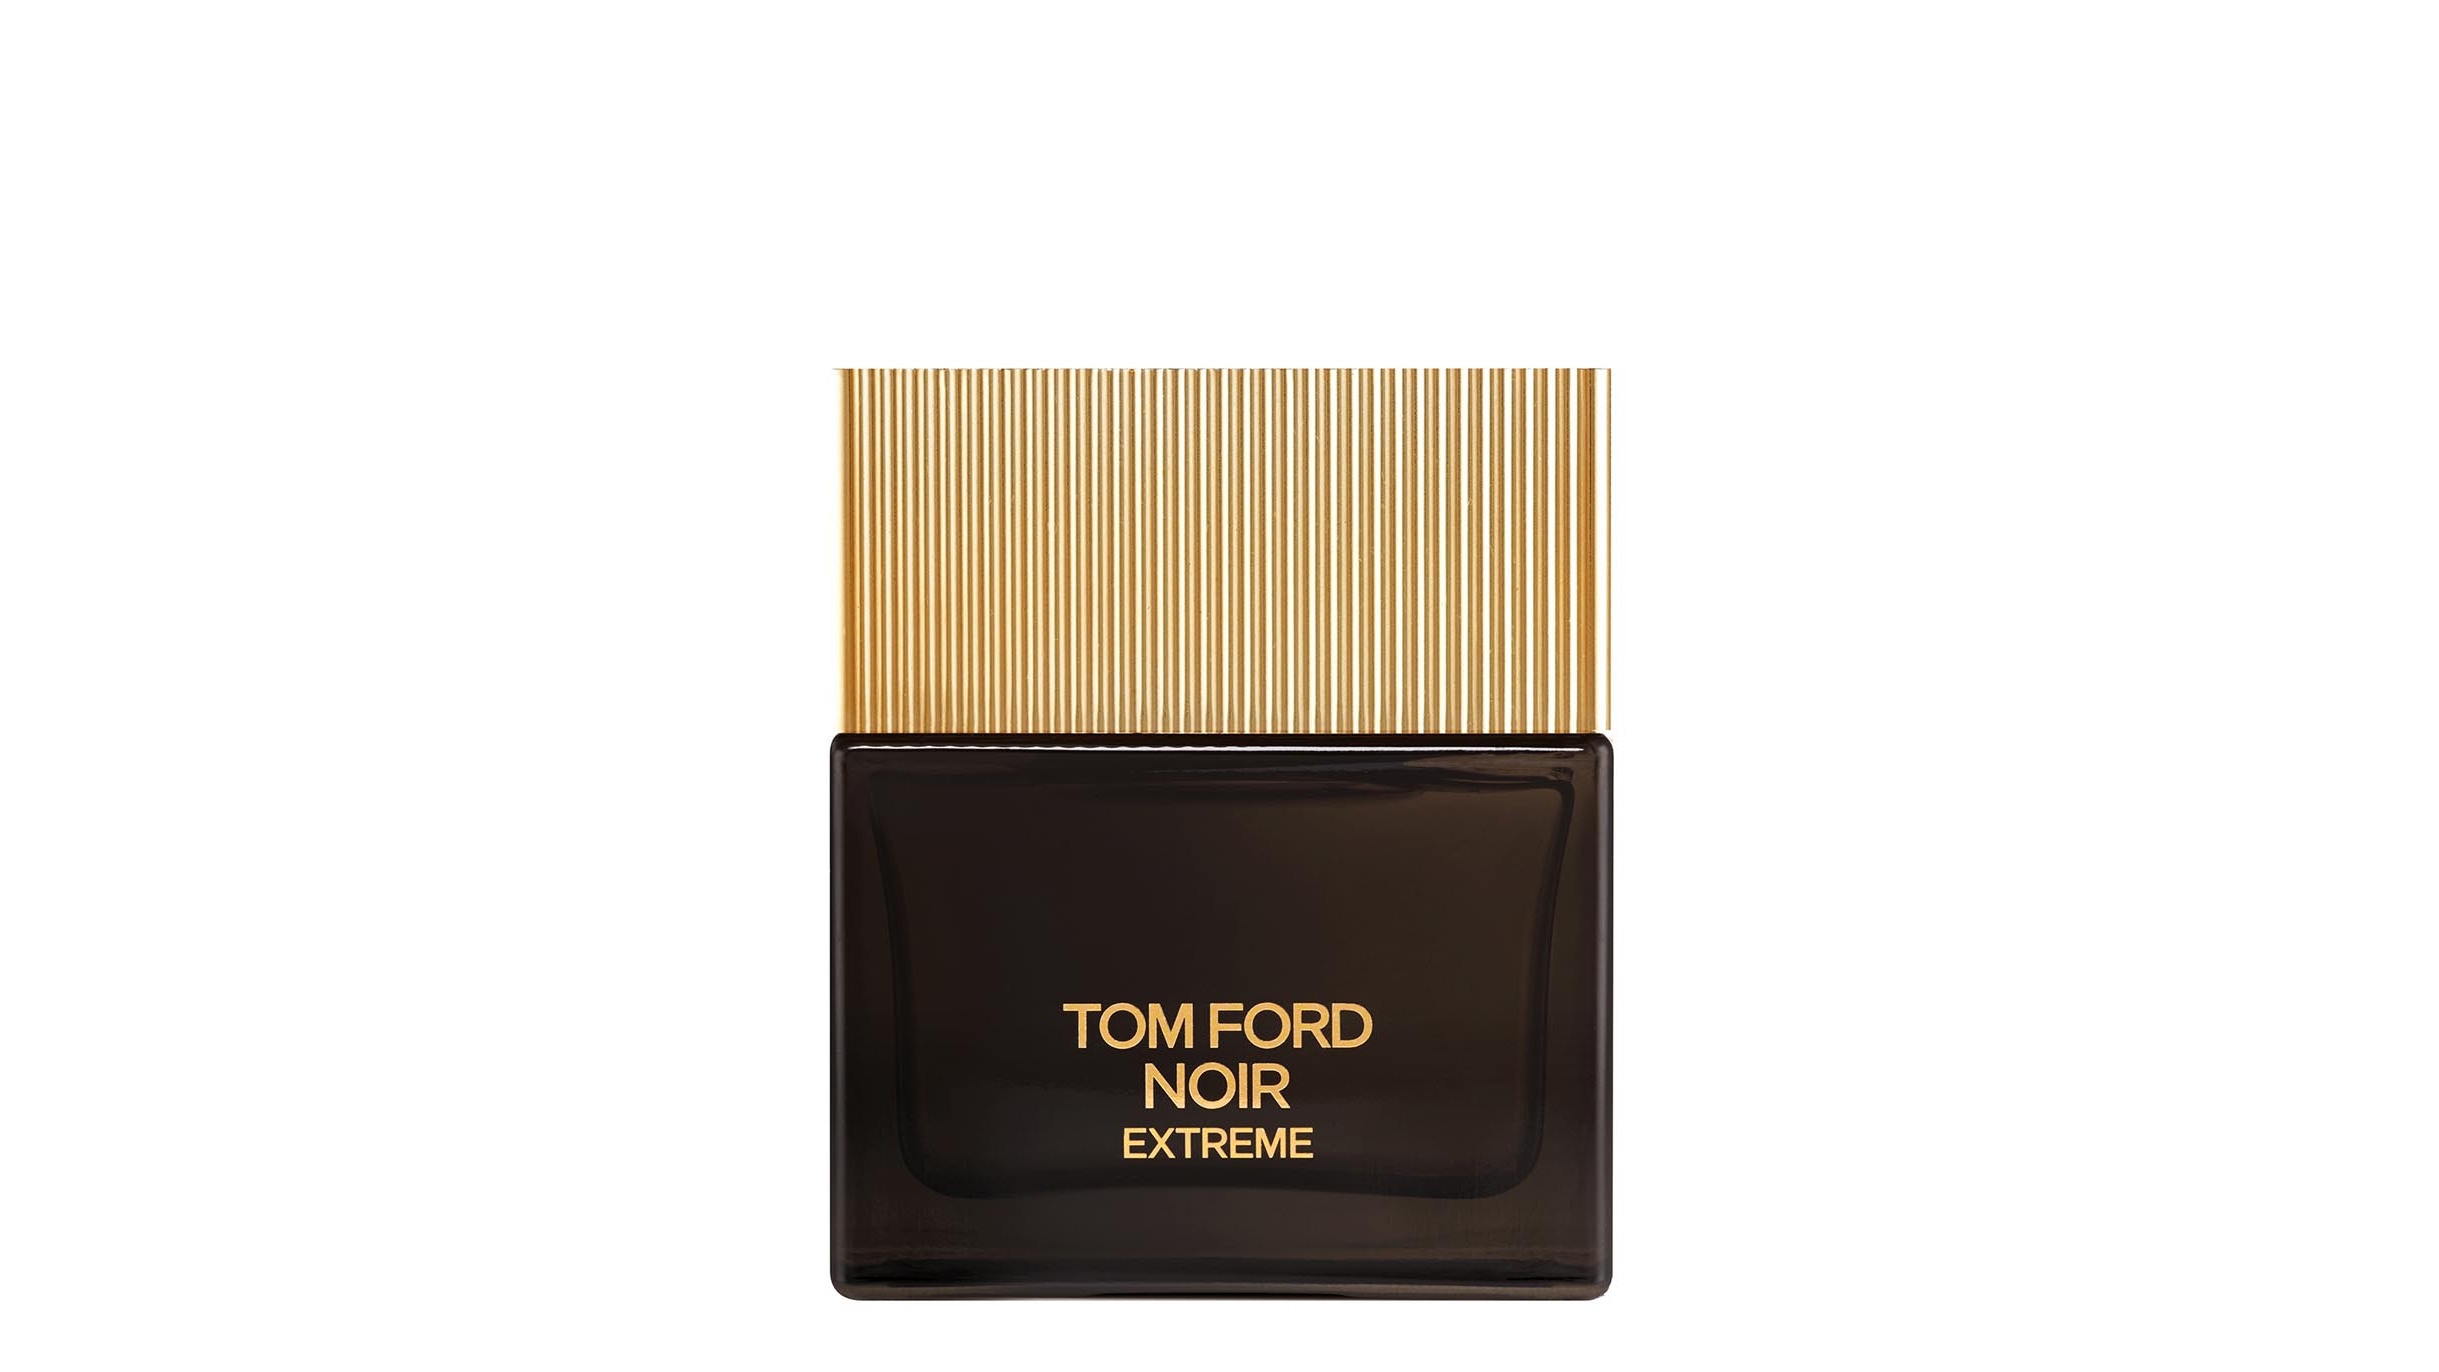 Tom Ford Noir Extreme Eau De Parfum Spray 50ml - Harvey Nichols